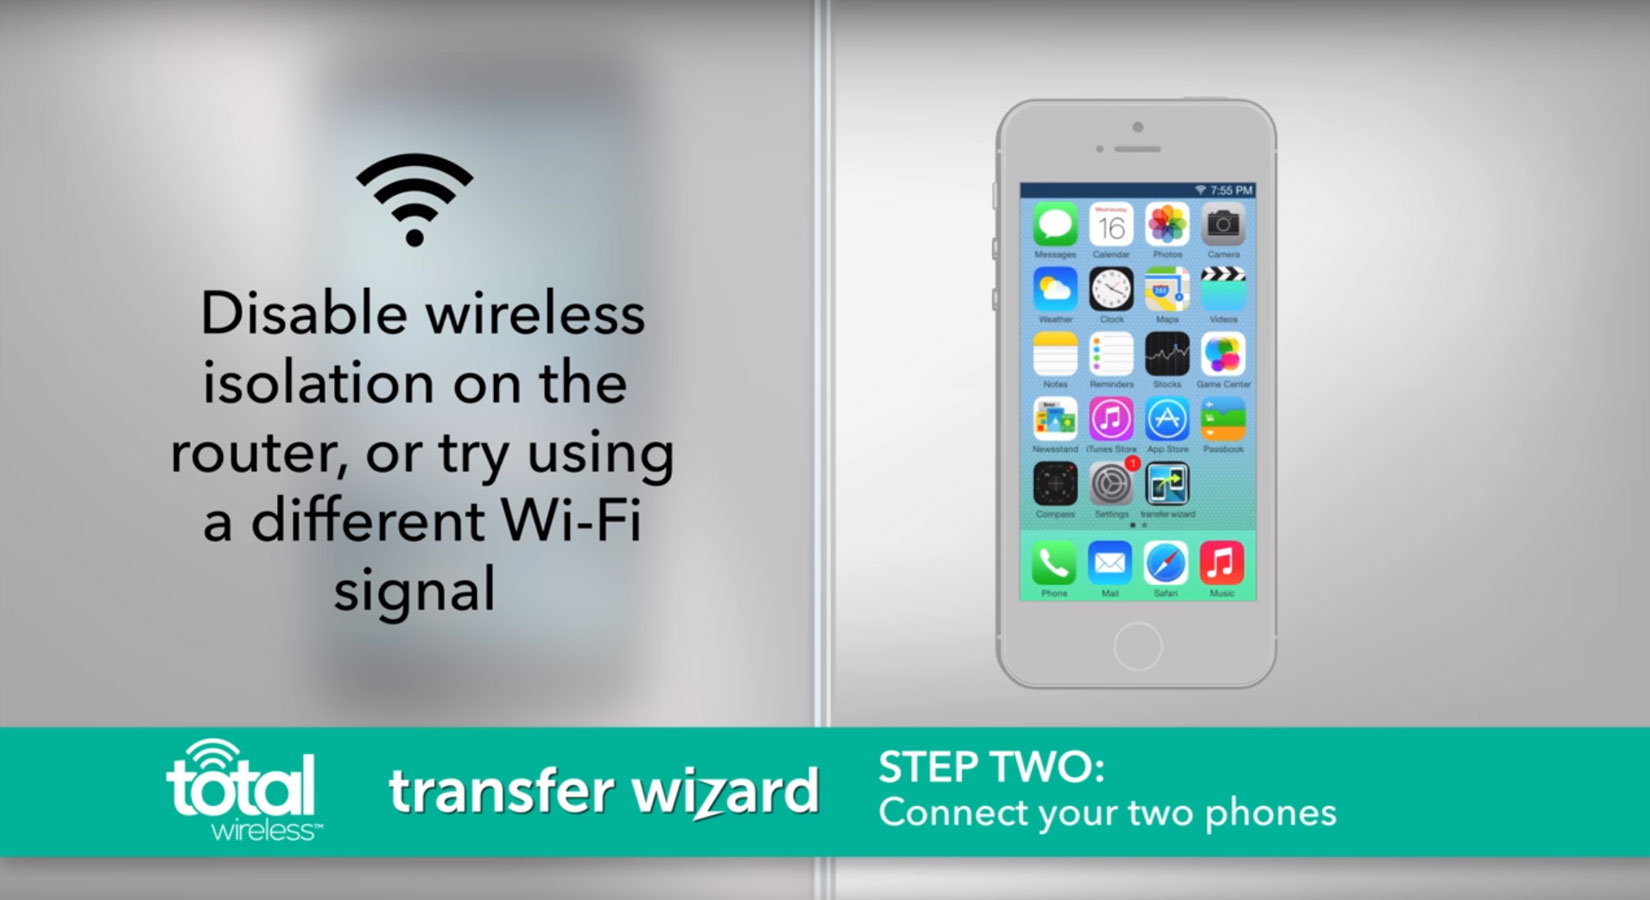 Total Wireless "Transfer Wizard"